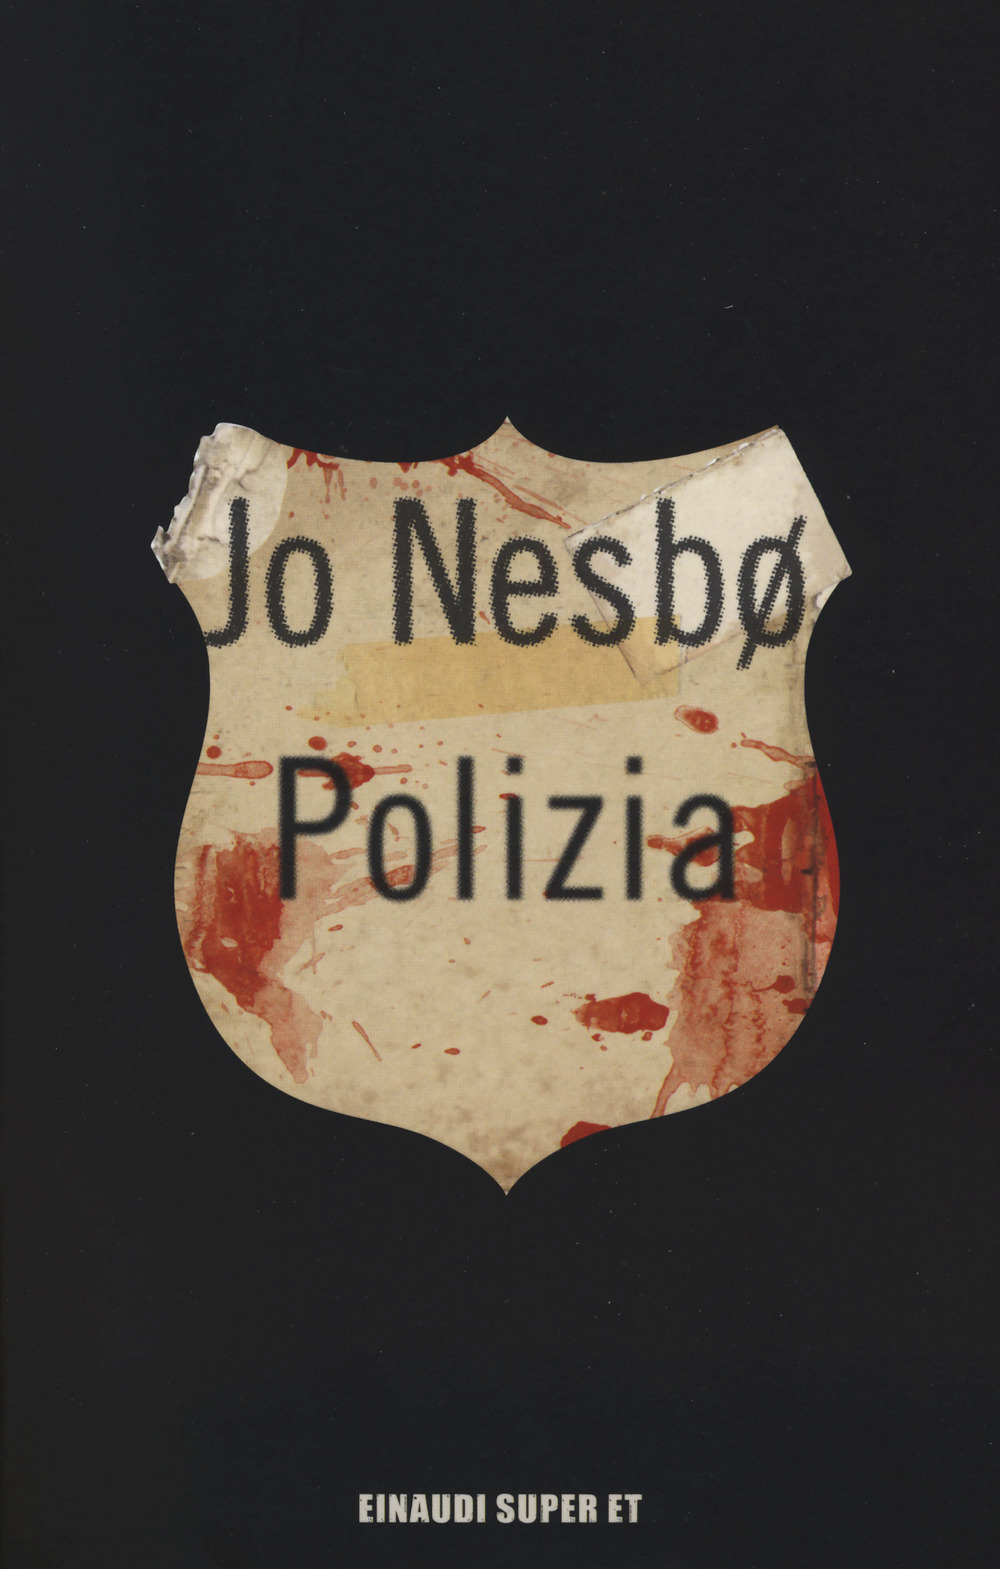 Polizia - Jo Nesbø - Einaudi